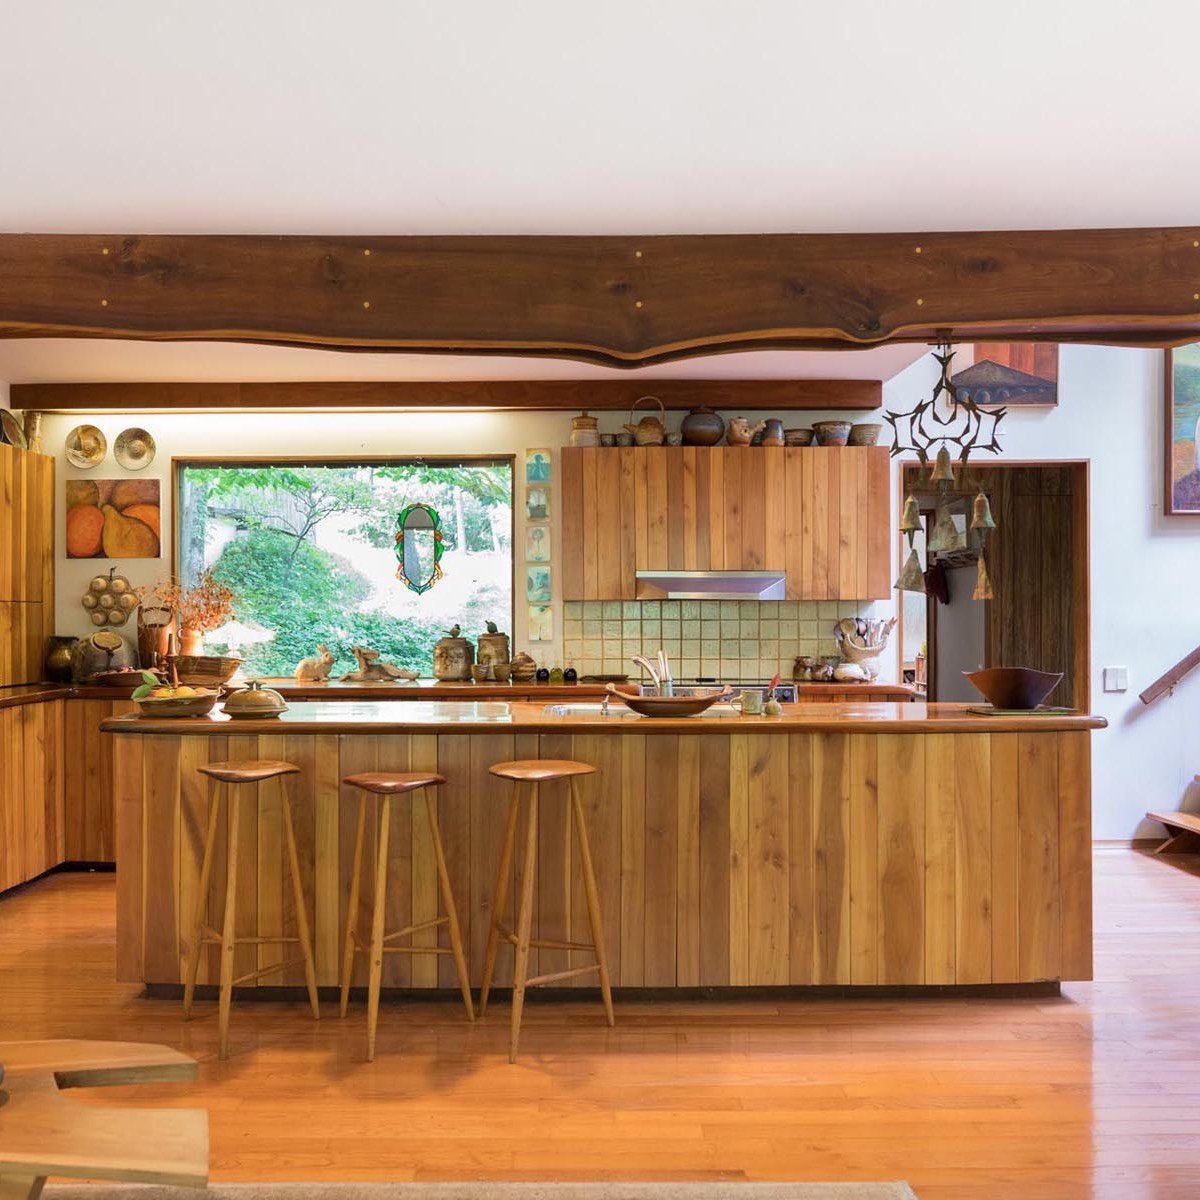 Philadelphia Interior Design: Mid century modern styled kitchen